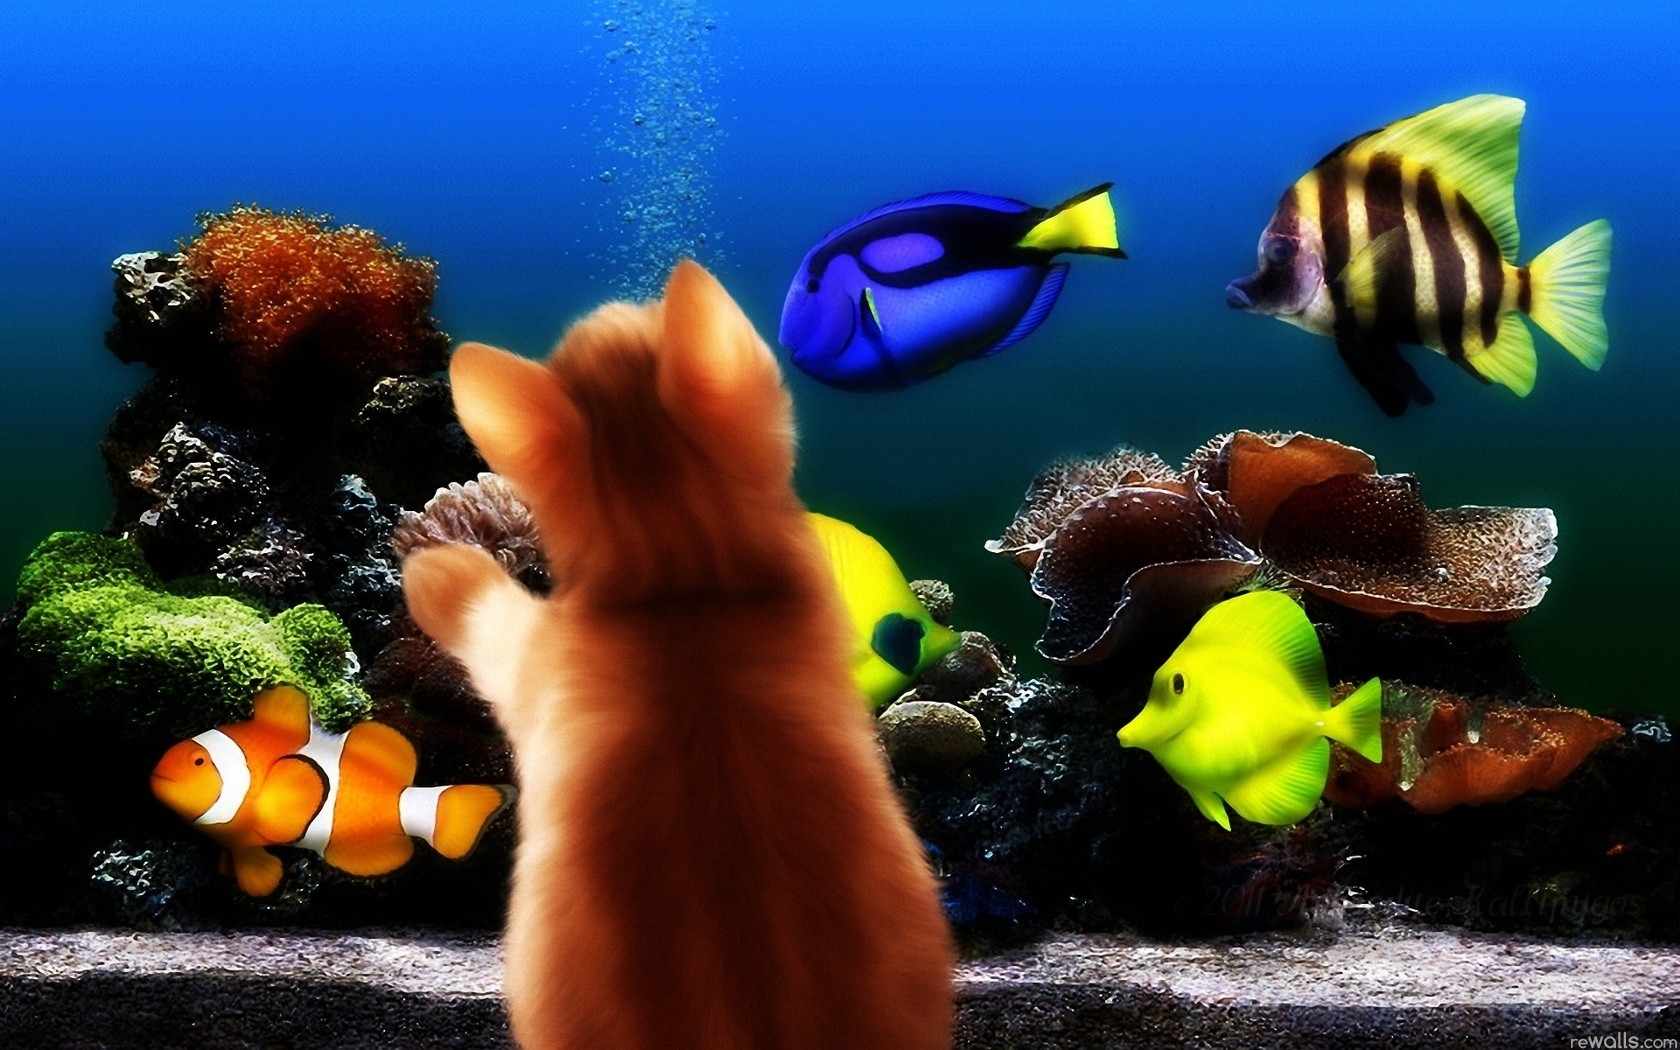 animals, Cats, Kittens, Fishes, Aquarium, Sea, Life ...